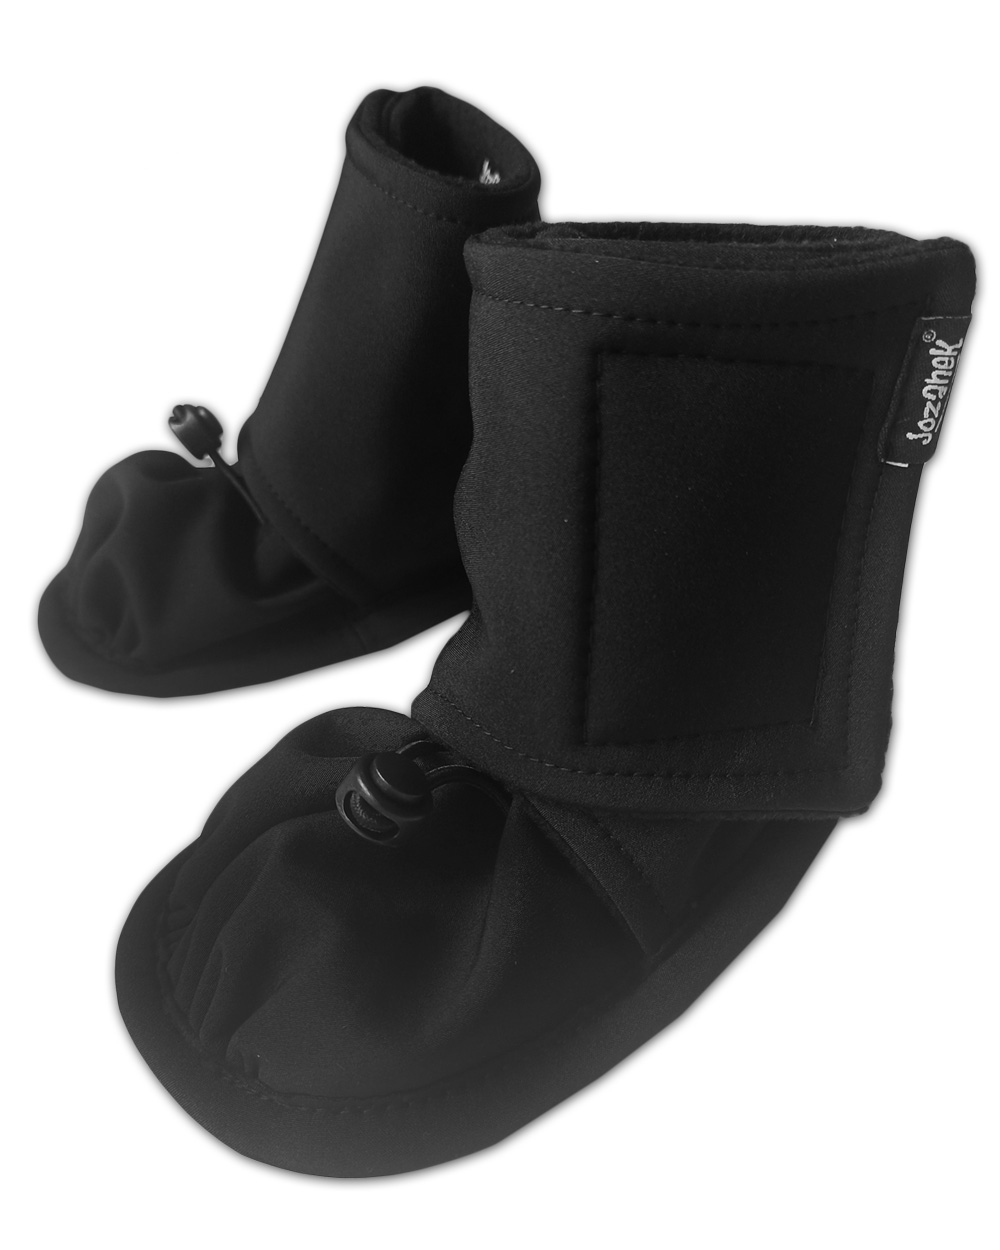 Zimné topánočky softshell + fleece, čierne